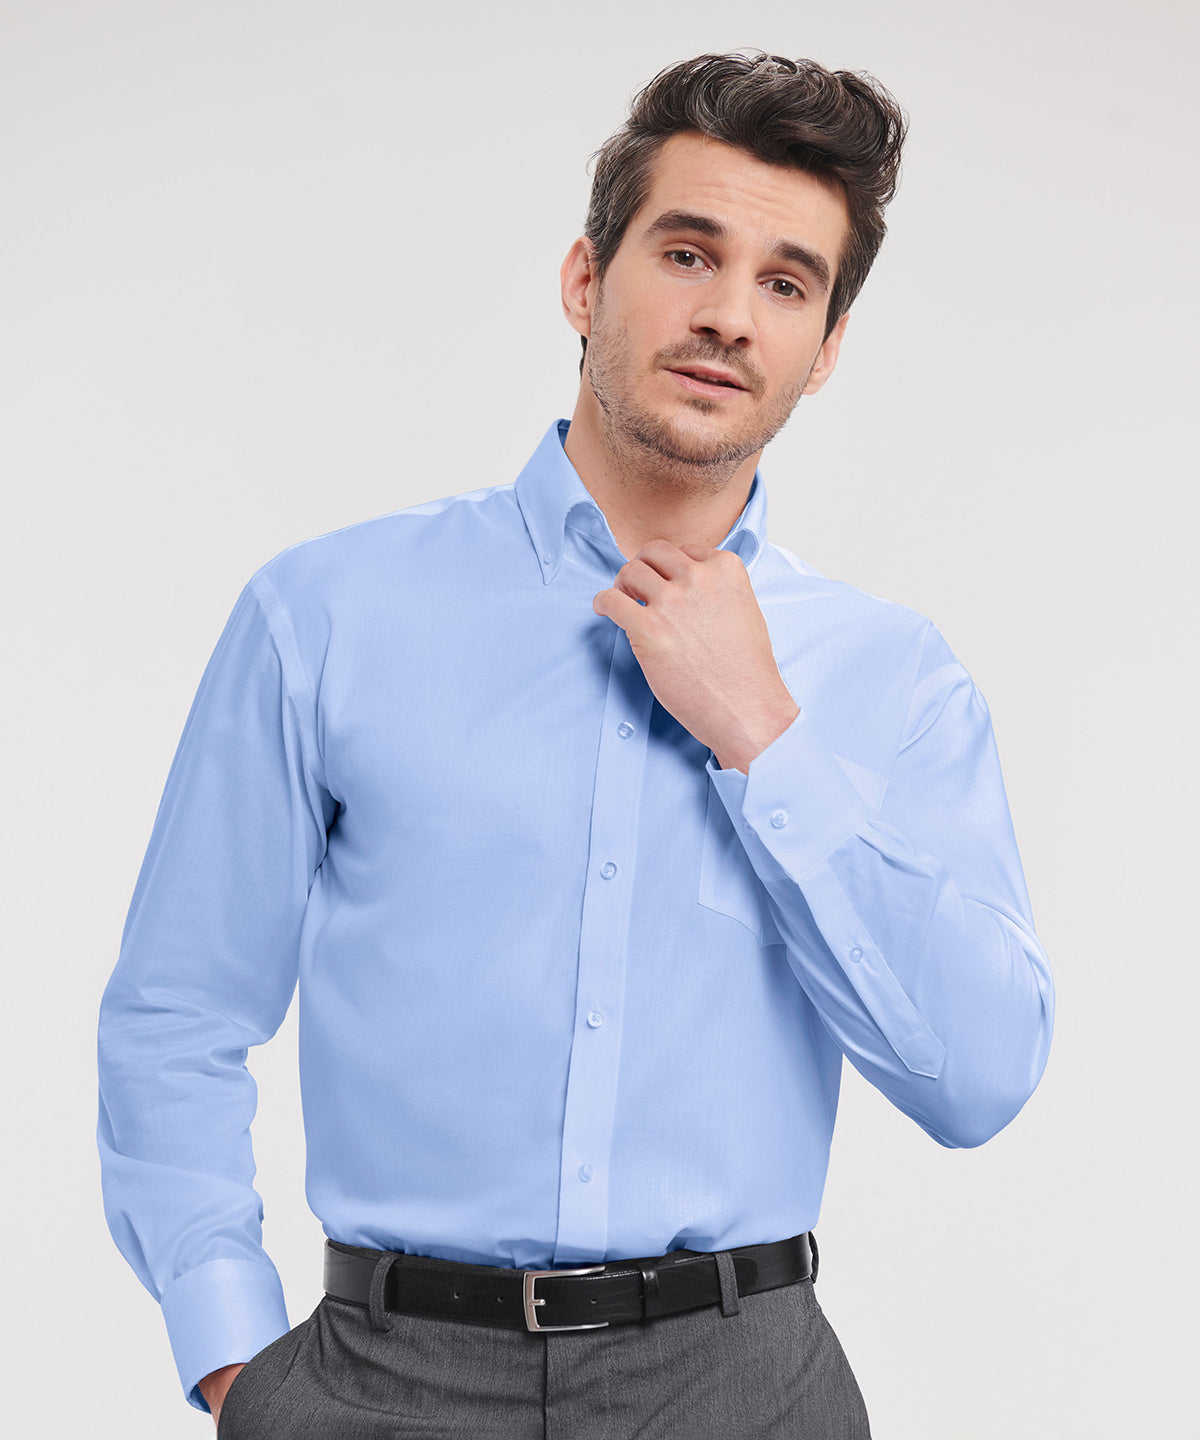 Bolir - Long Sleeve Ultimate Non-iron Shirt